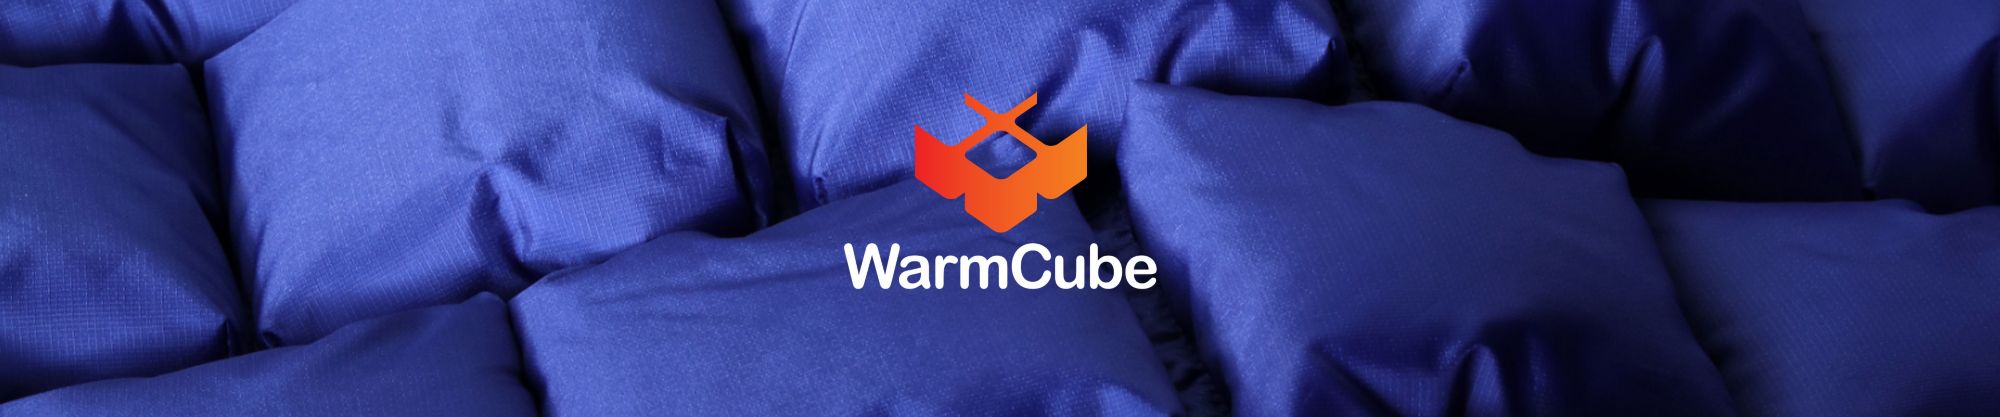 Warm Cube logo